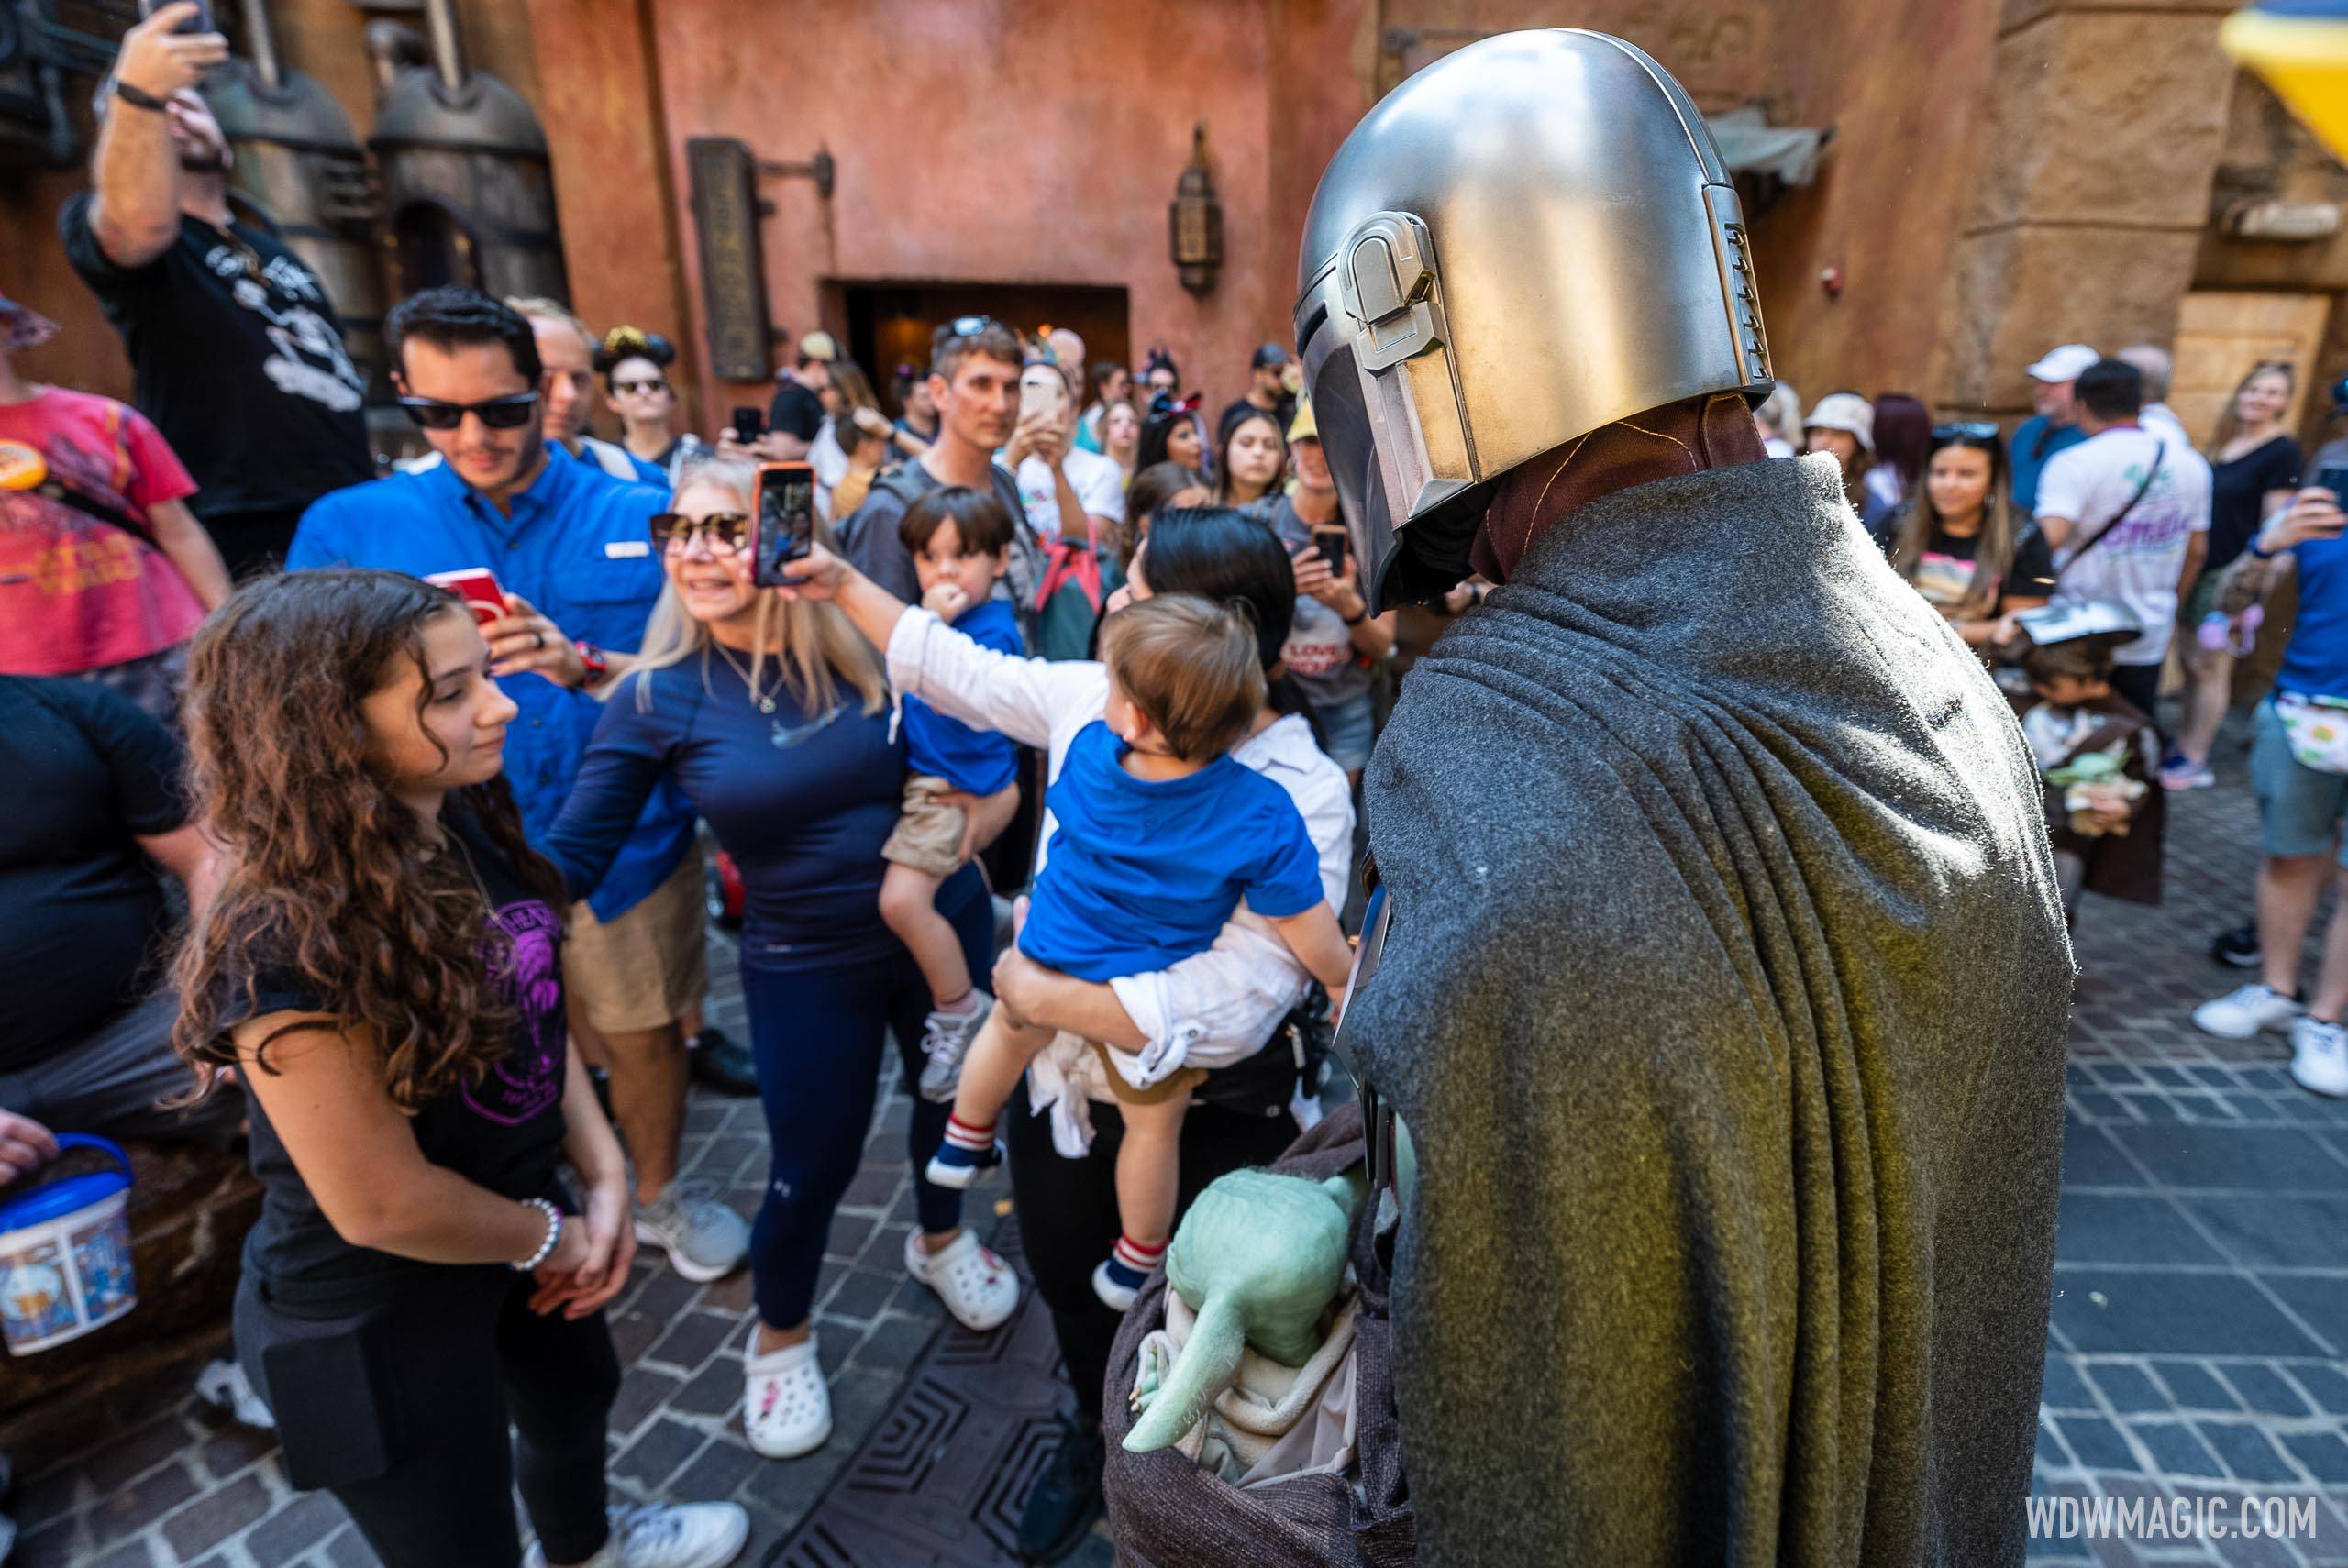 The Mandalorian and Grogu meet and greet at Disney's Hollywood Studios